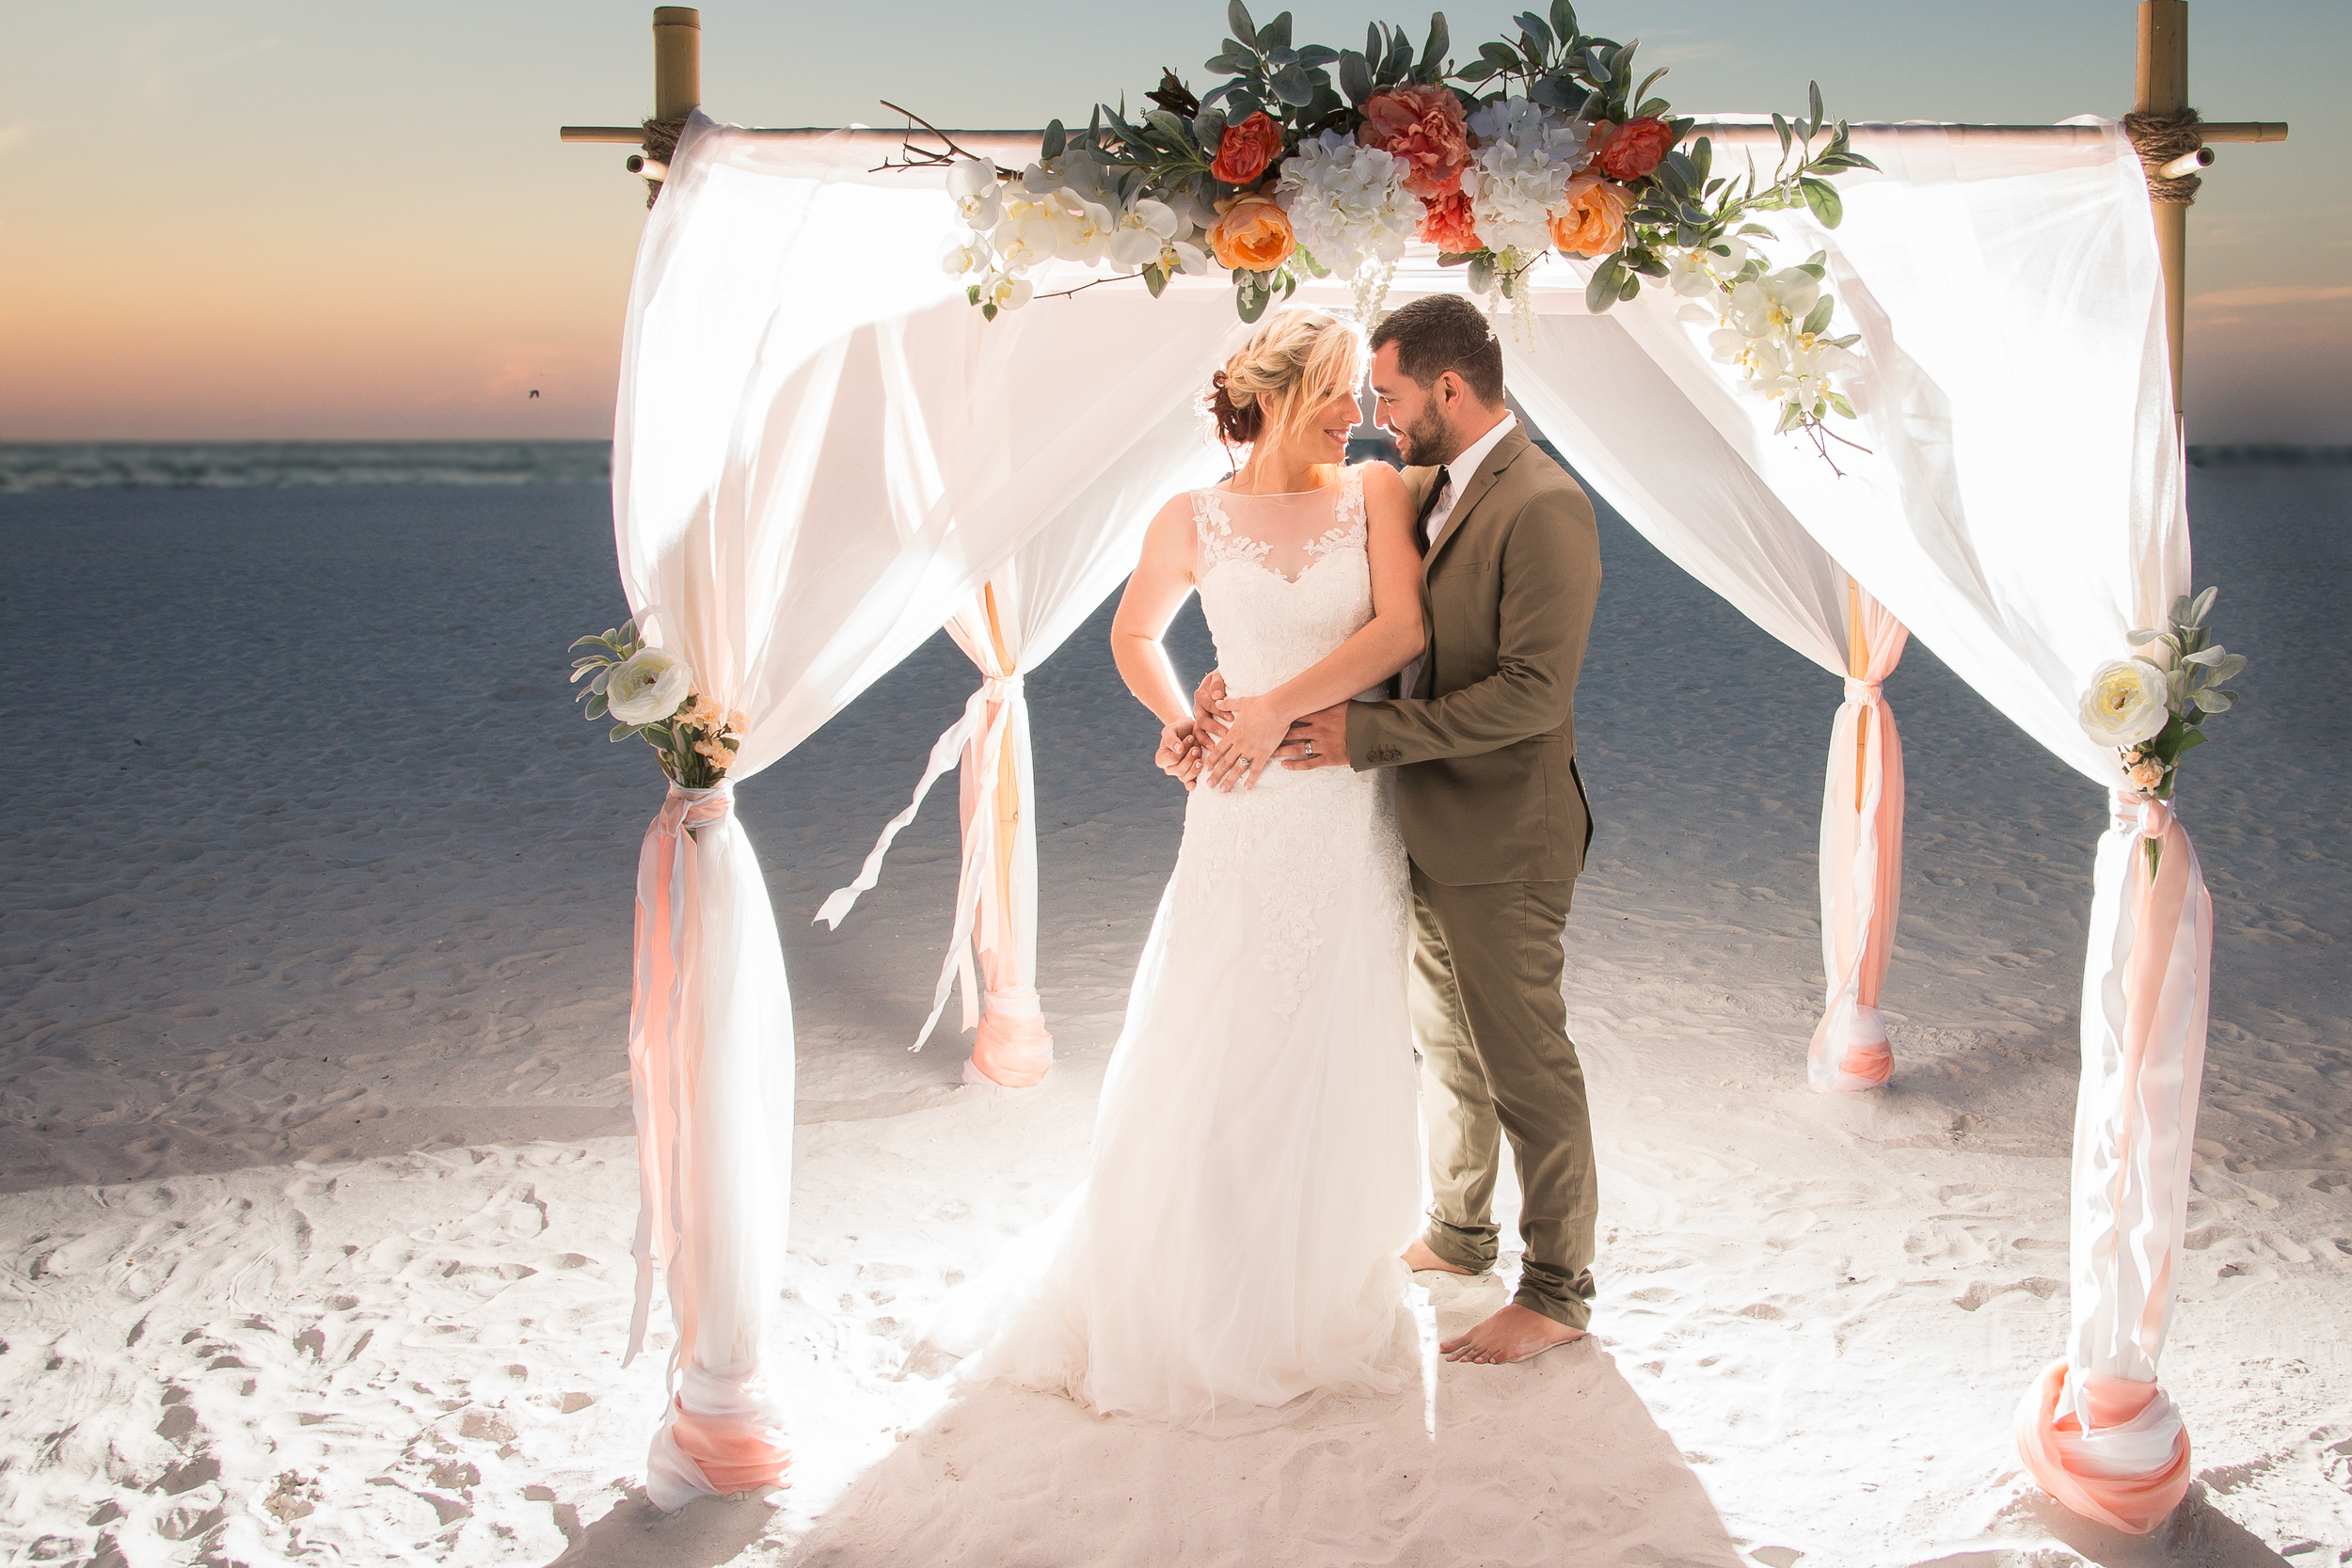 Tampa wedding photographer | St.Pete wedding photographer